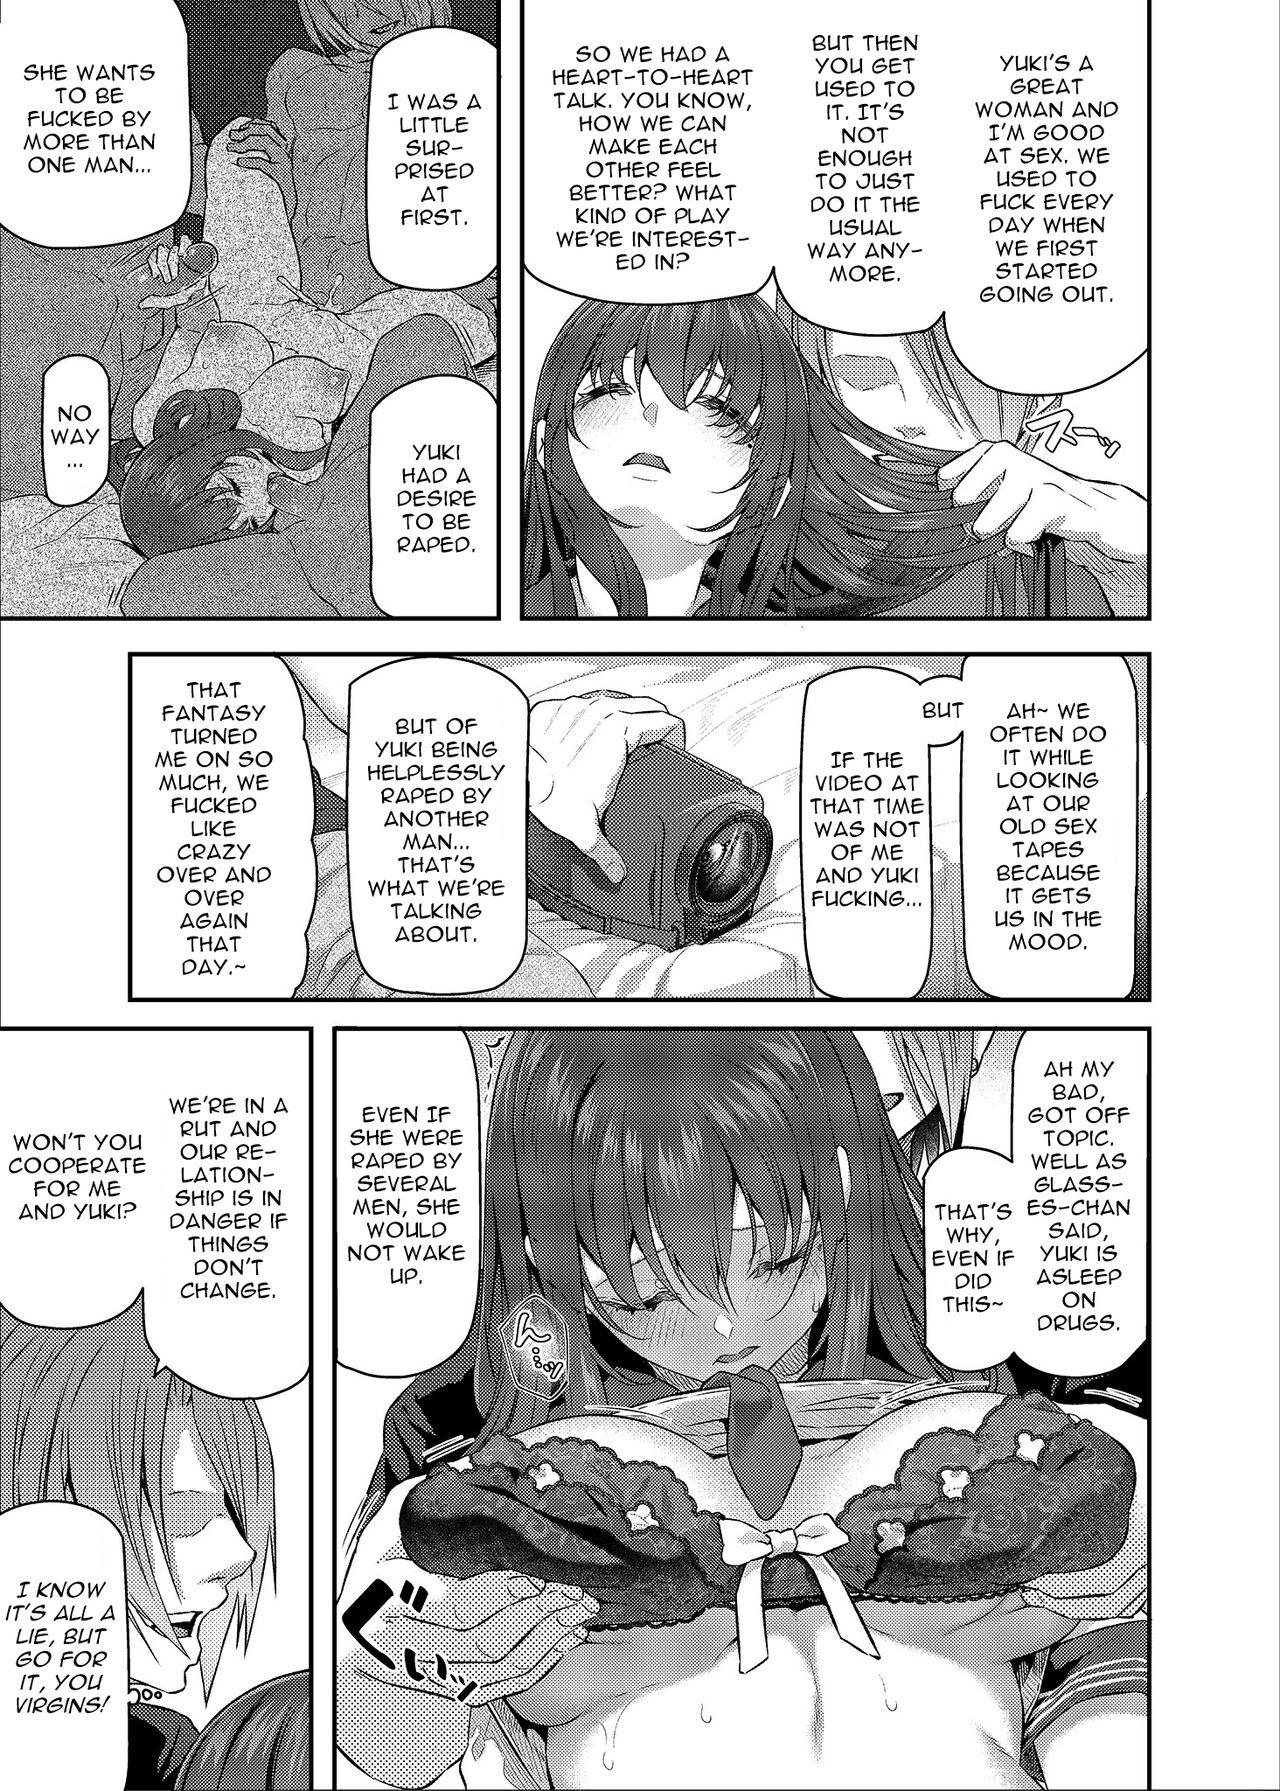 Bare Suika San - Original Ex Girlfriend - Page 6